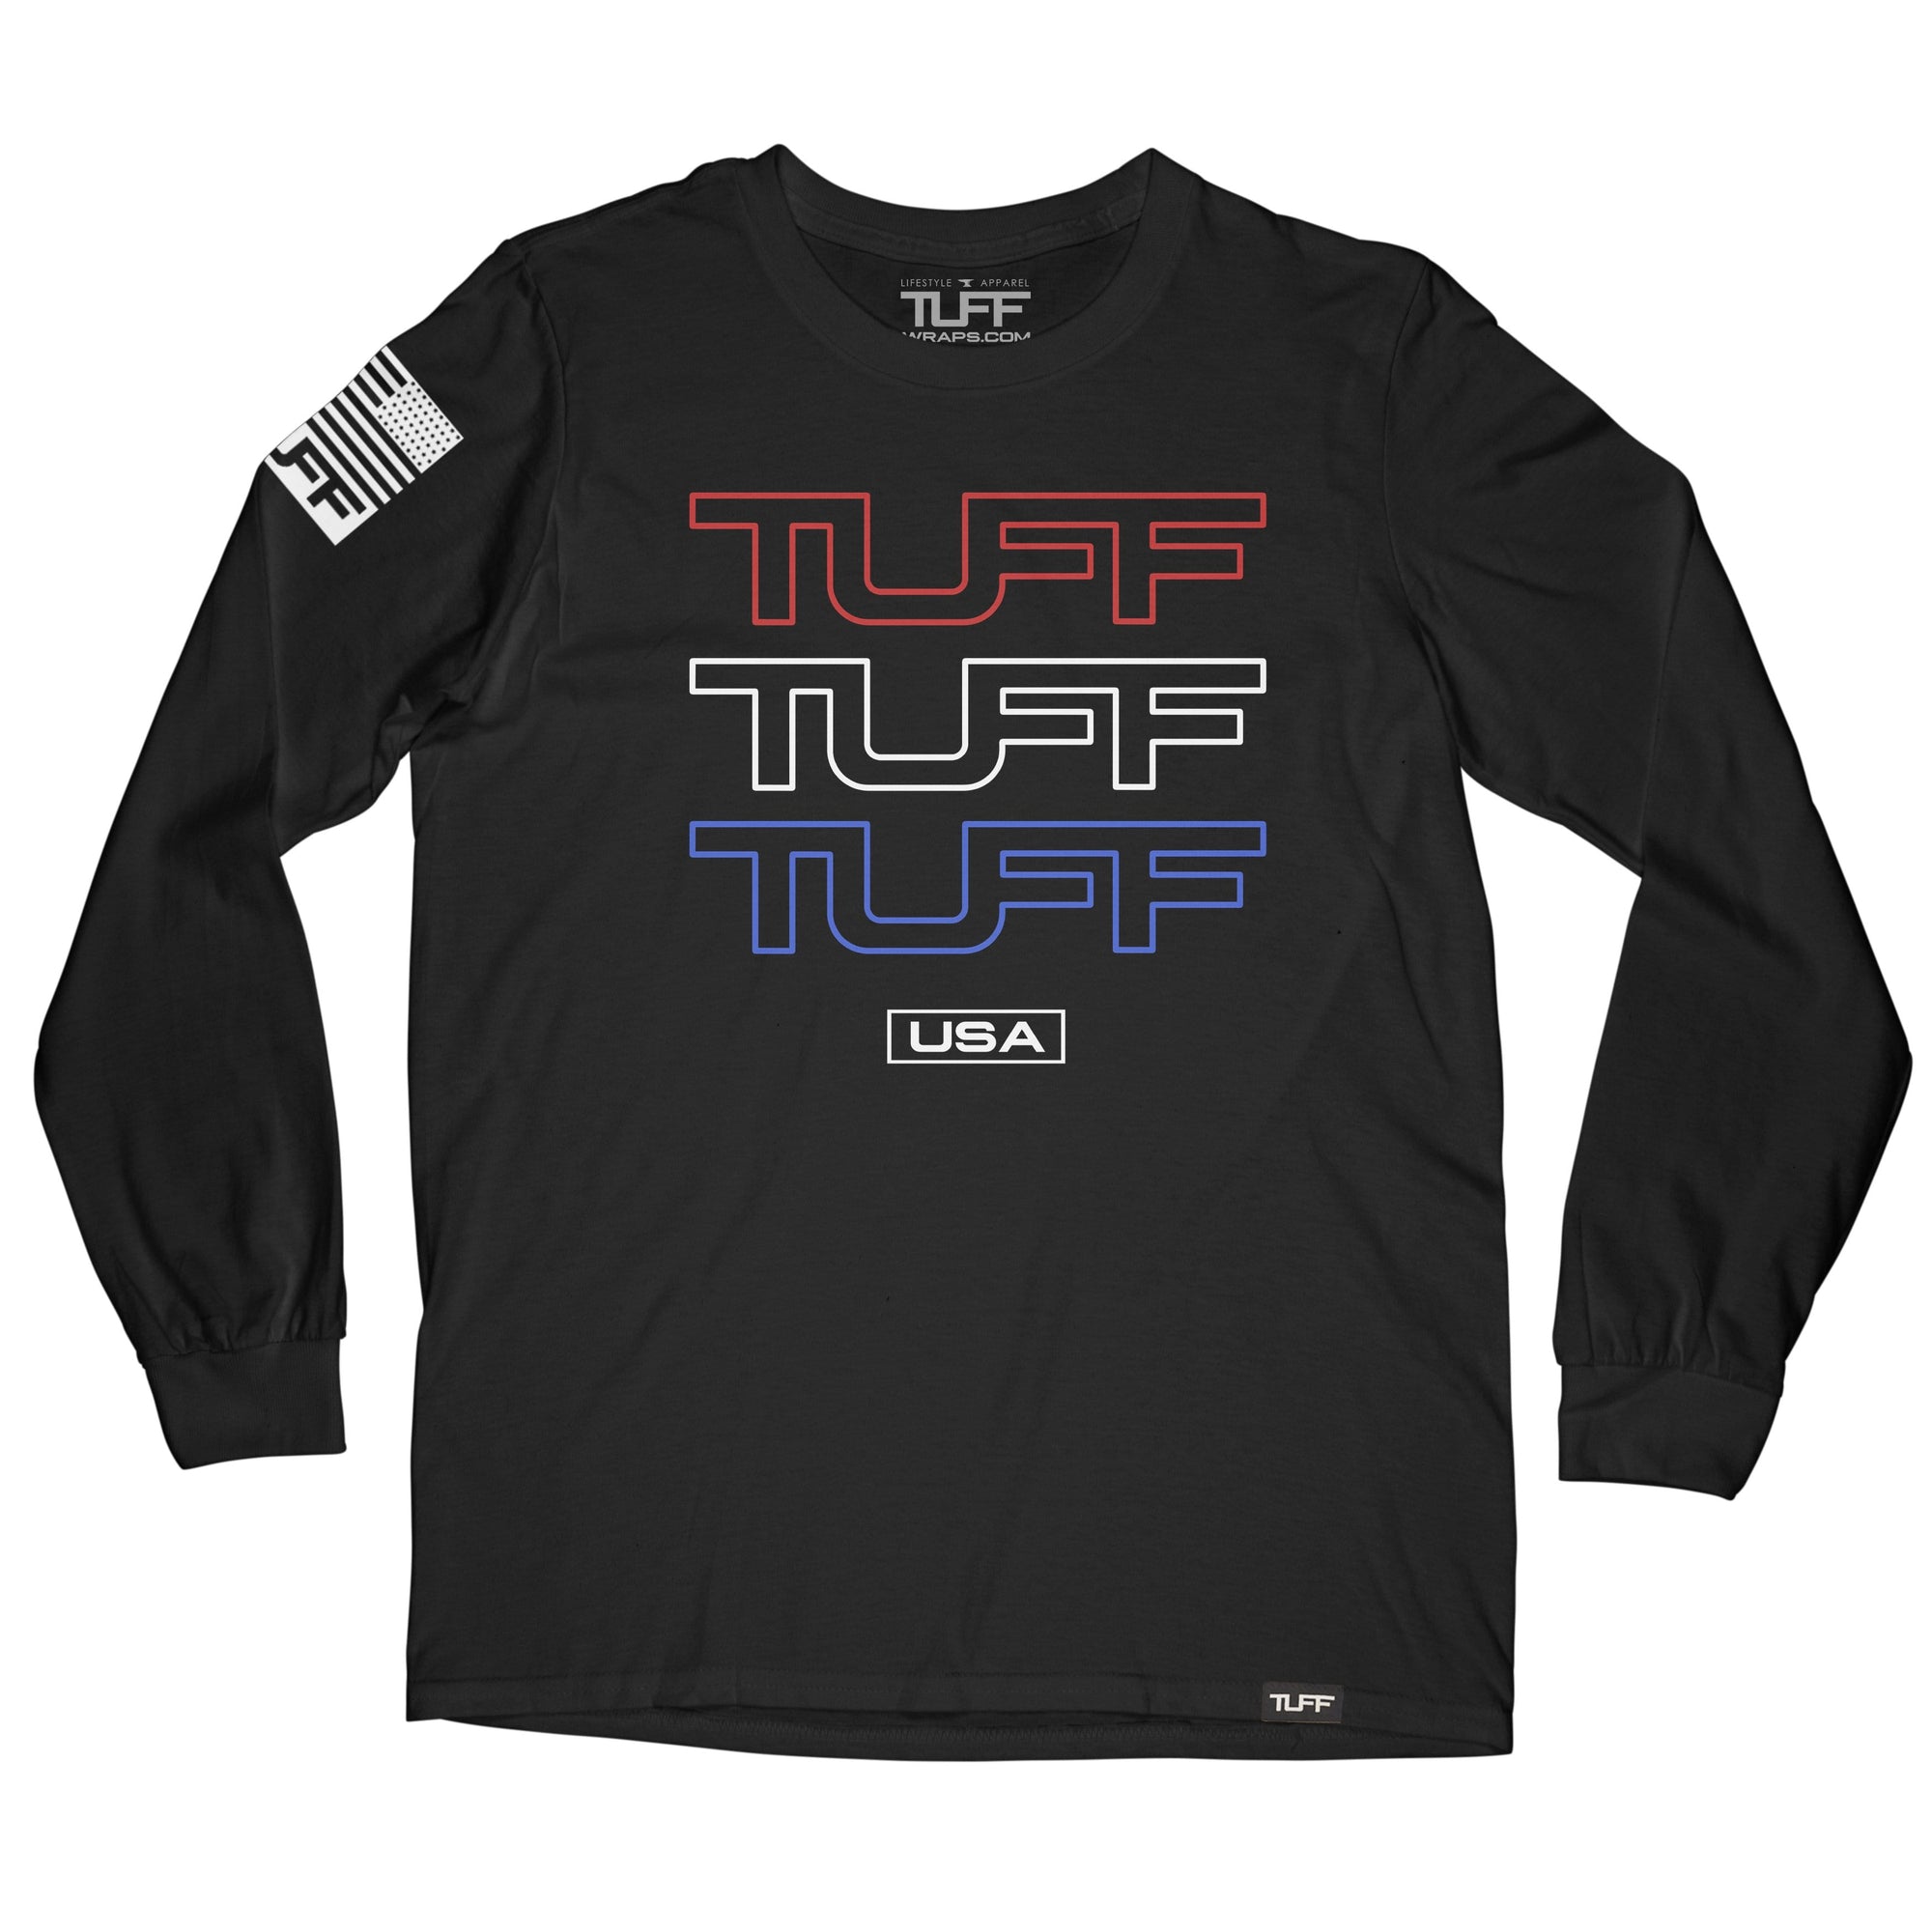 Triple TUFF USA Long Sleeve Tee S / Black TuffWraps.com